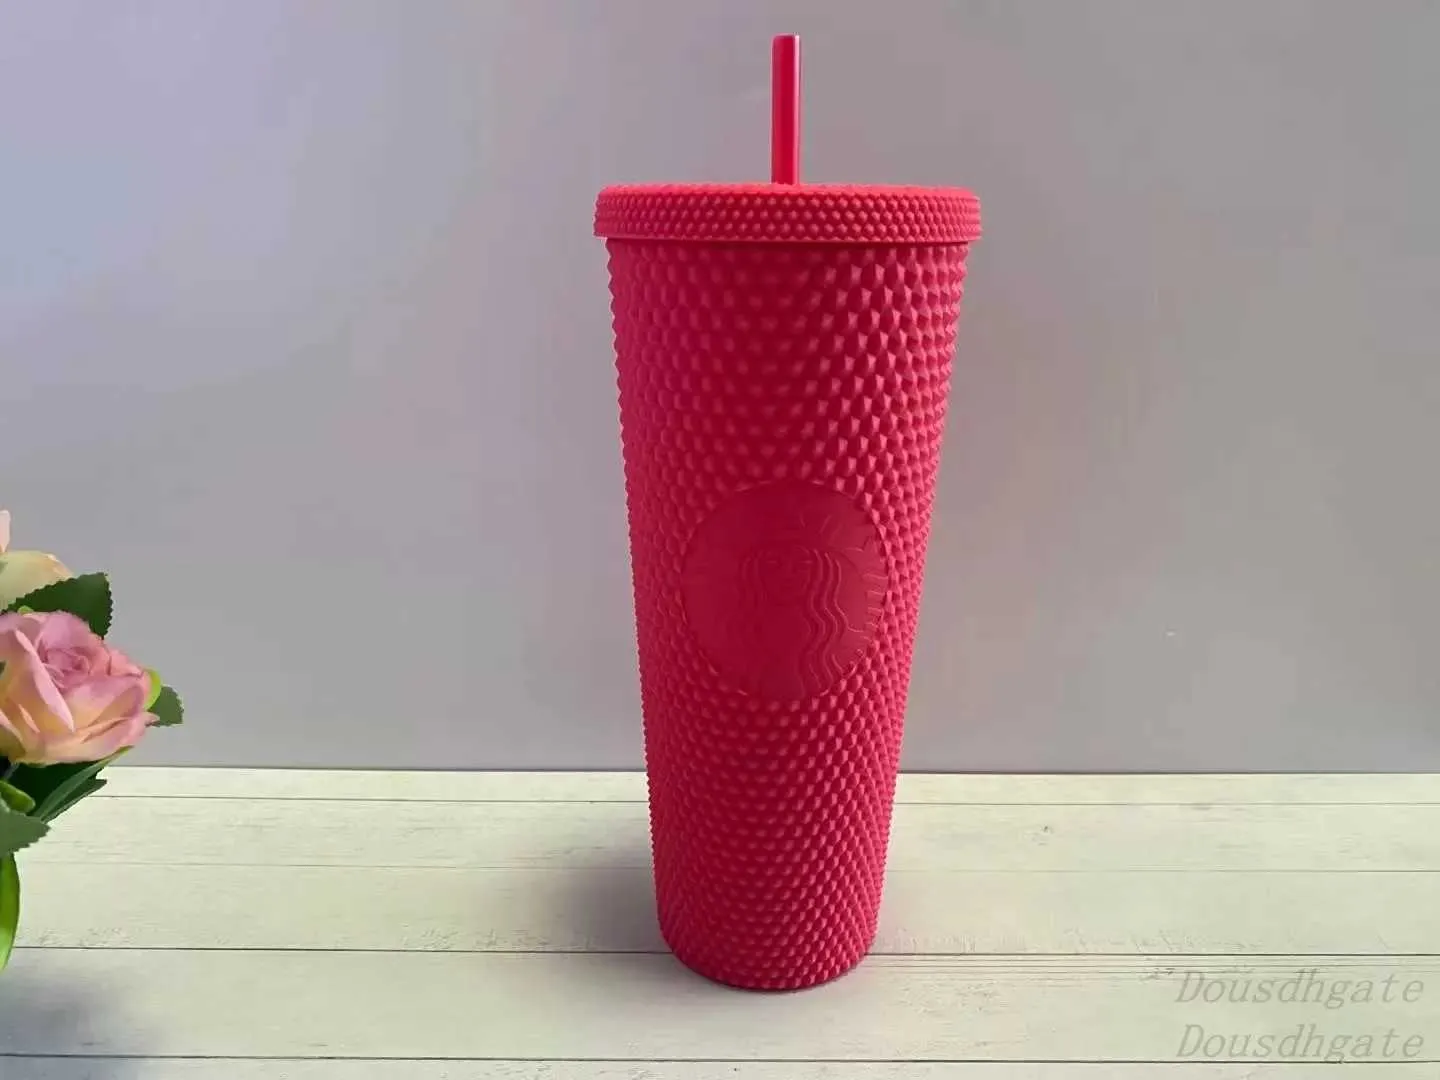 Starbucks sjöjungfru gudinna Studded Cup Tumblers 710 ml Carbie Pink Matte Black Plastic Mugs With Straw330f